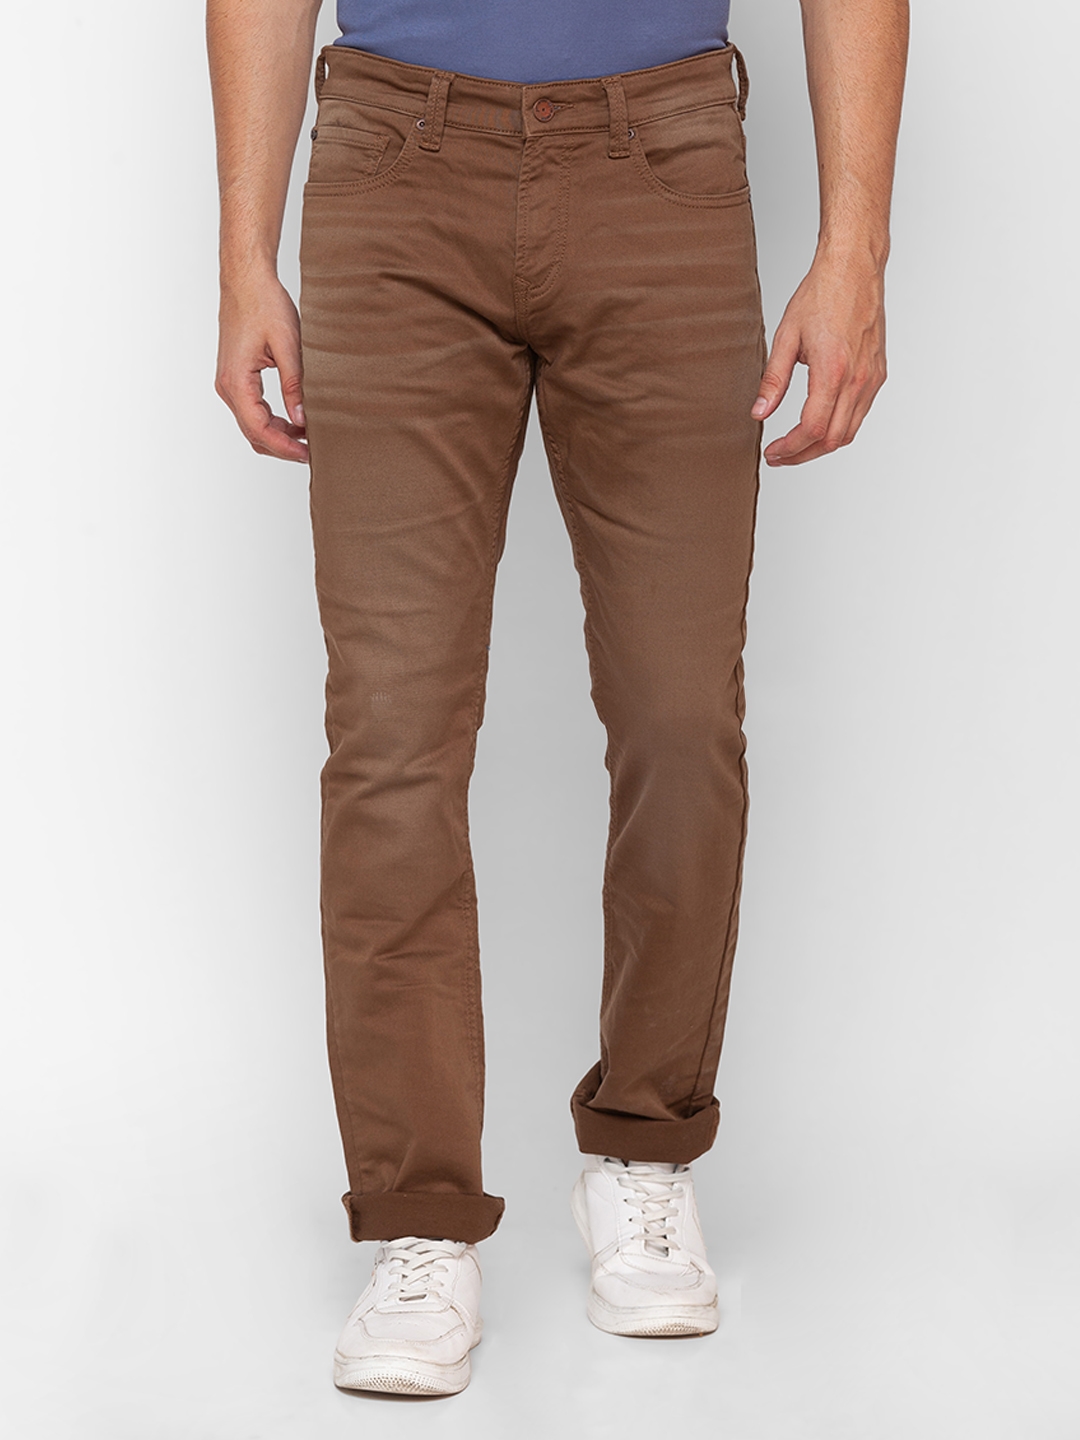 Spykar | Spykar Coffee Brown Cotton Regular Fit Narrow Length Jeans For Men (Rover)